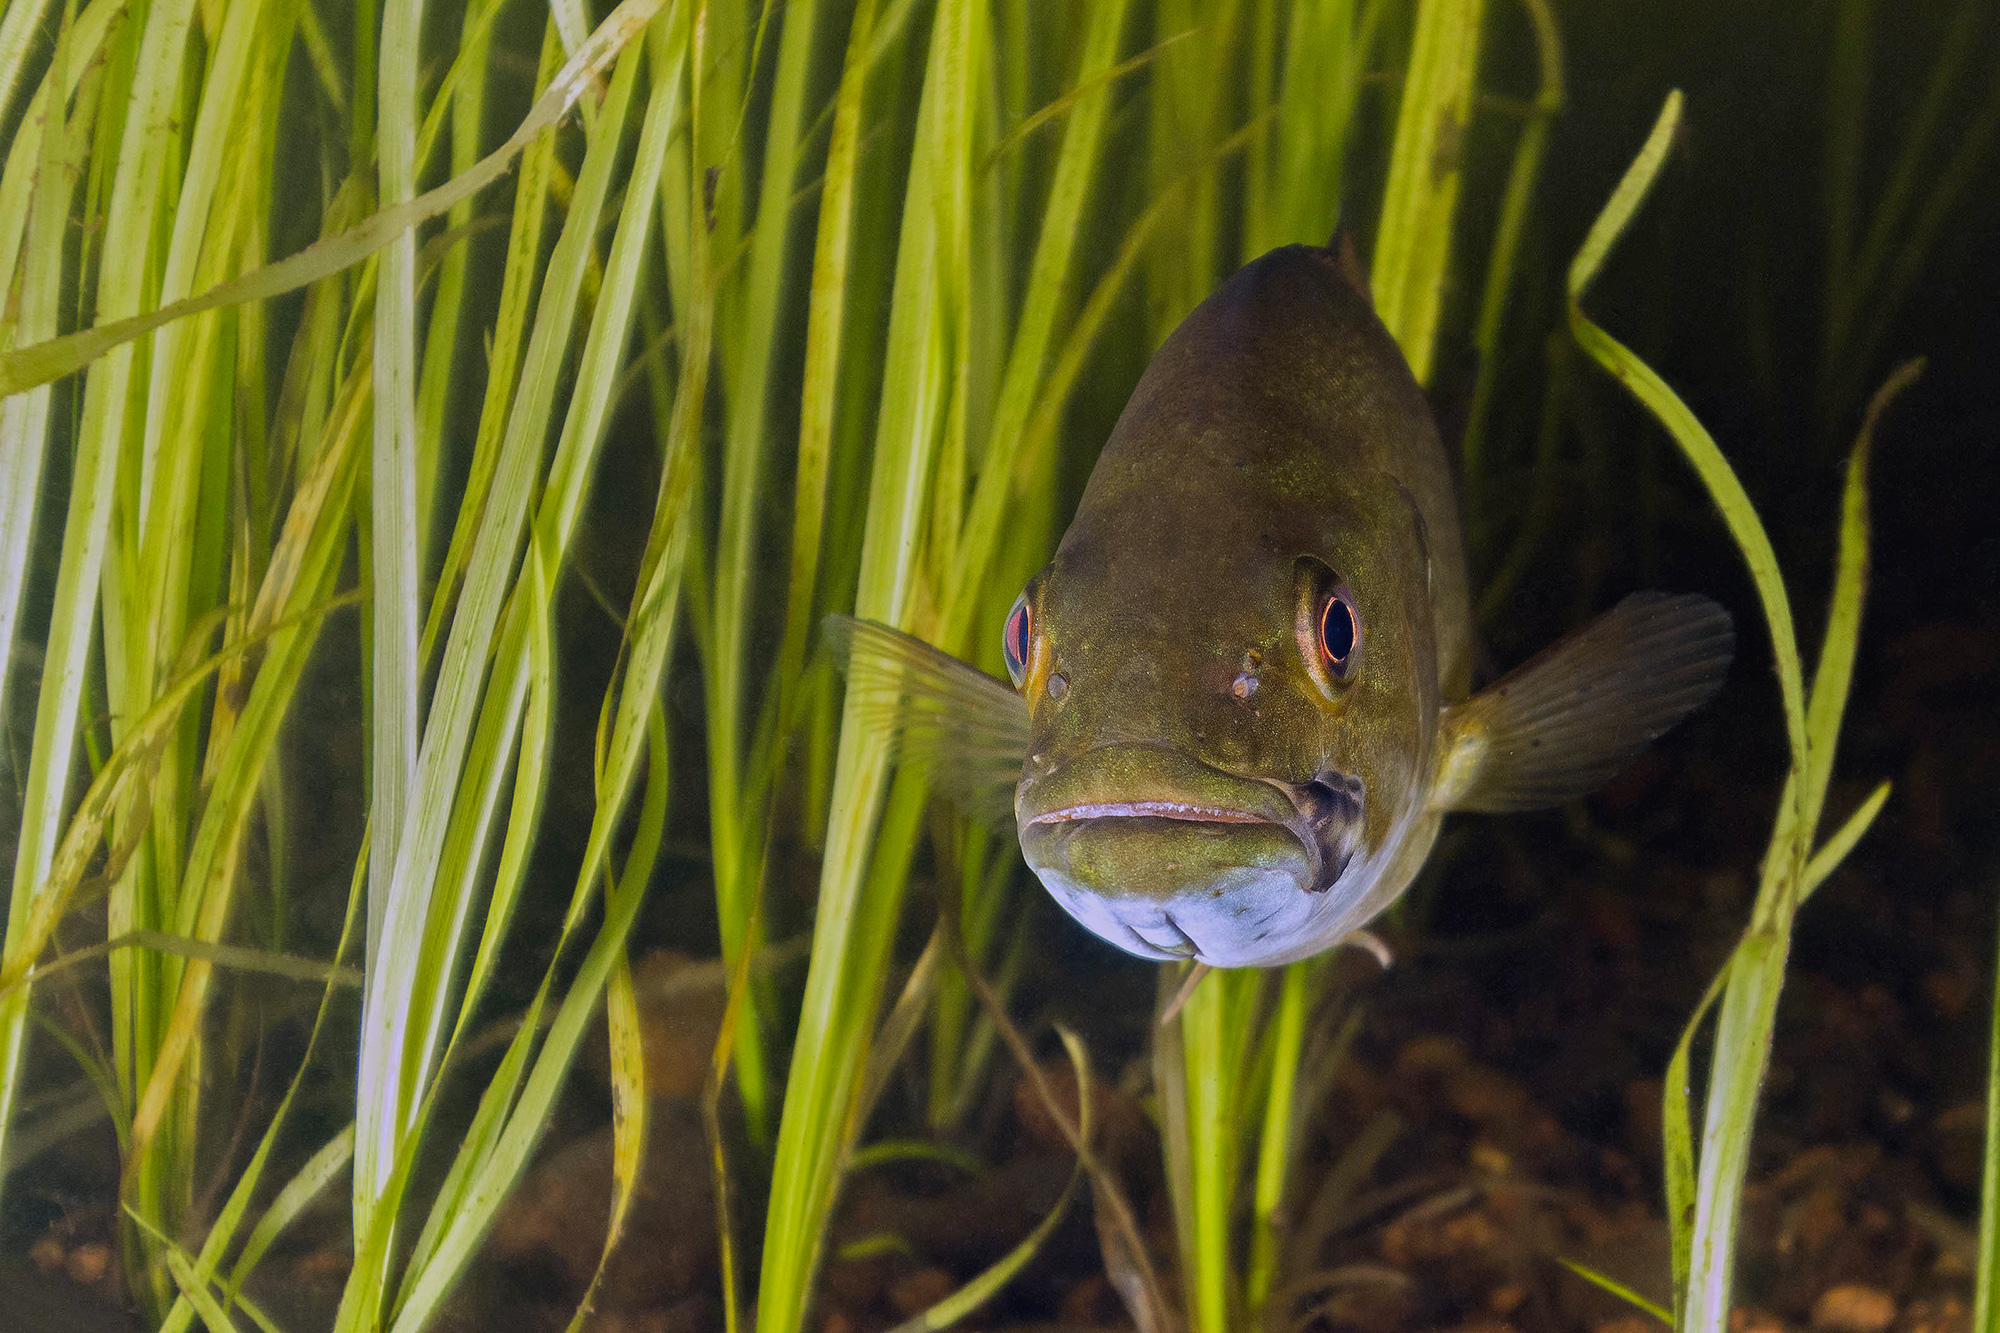 Smallmouth Bass and aquatic grass